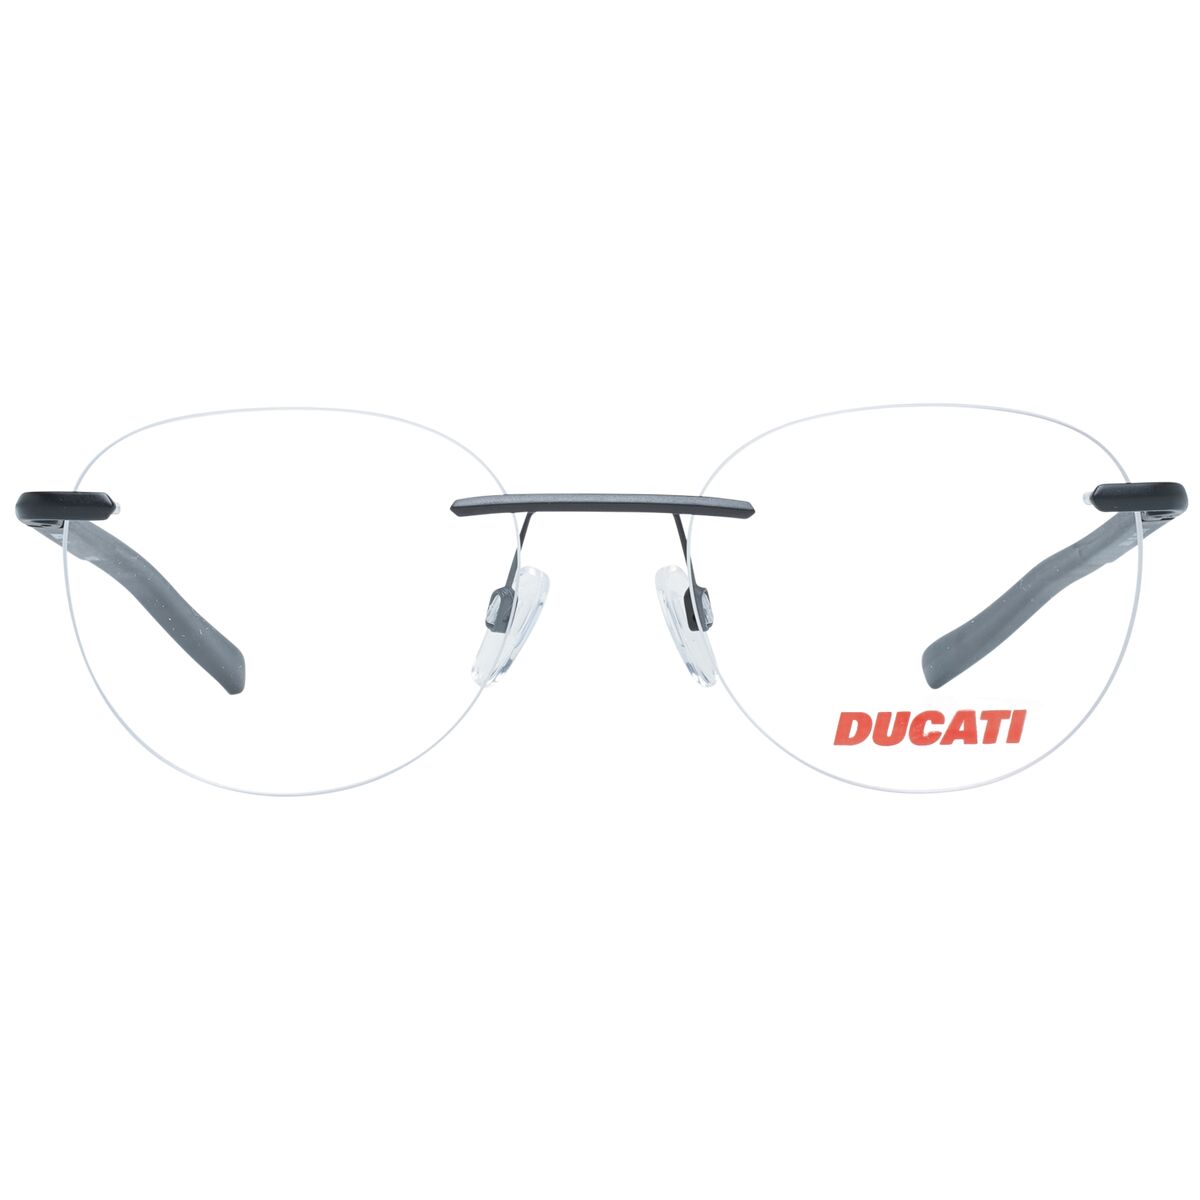 Kaufe Brillenfassung Ducati DA3014 52002 bei AWK Flagship um € 67.00